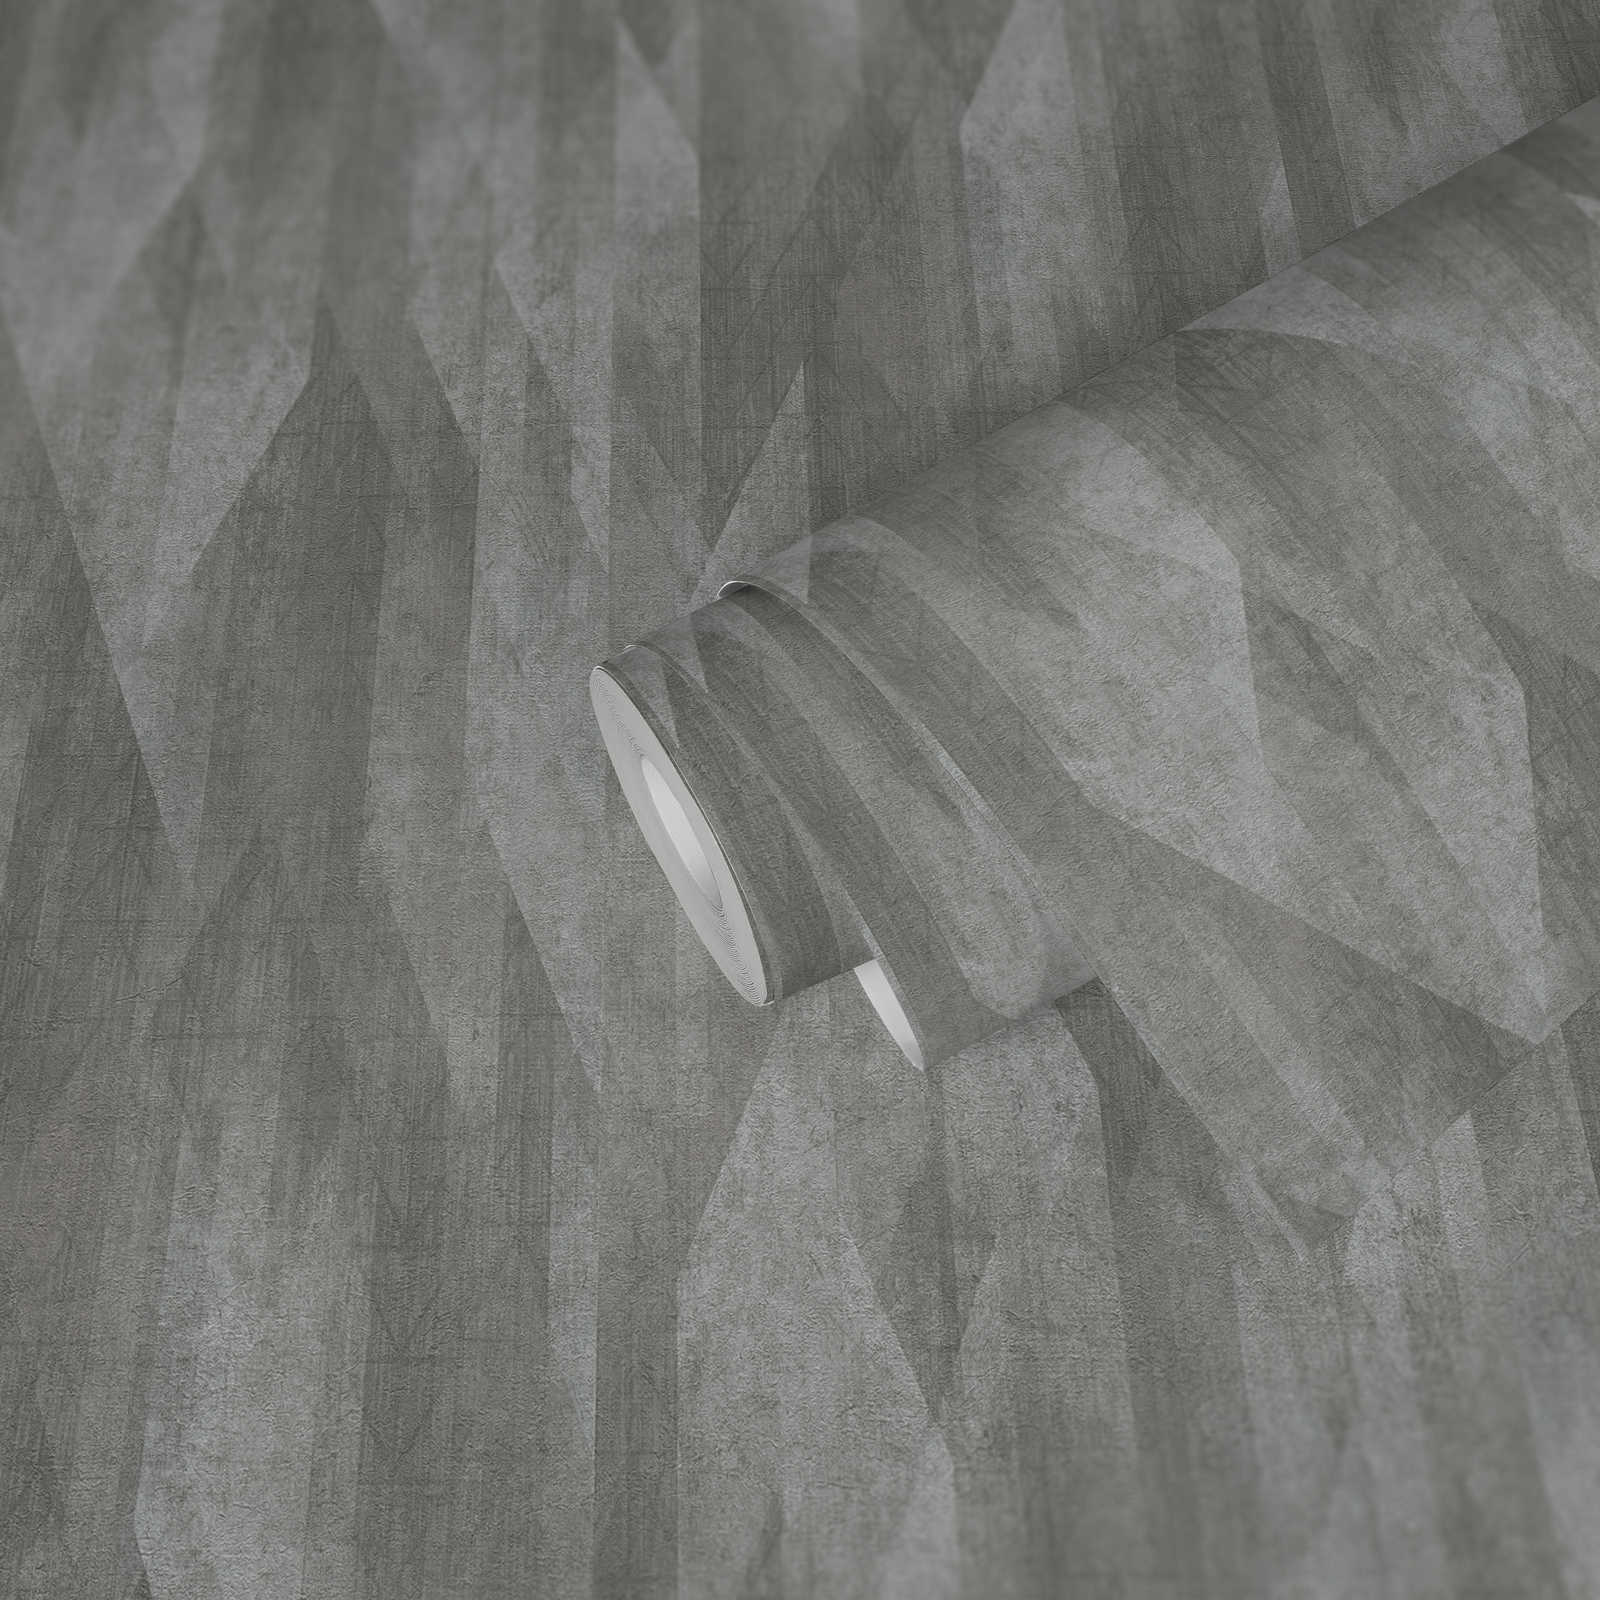             Non-woven wallpaper with graphic diamond design - grey
        